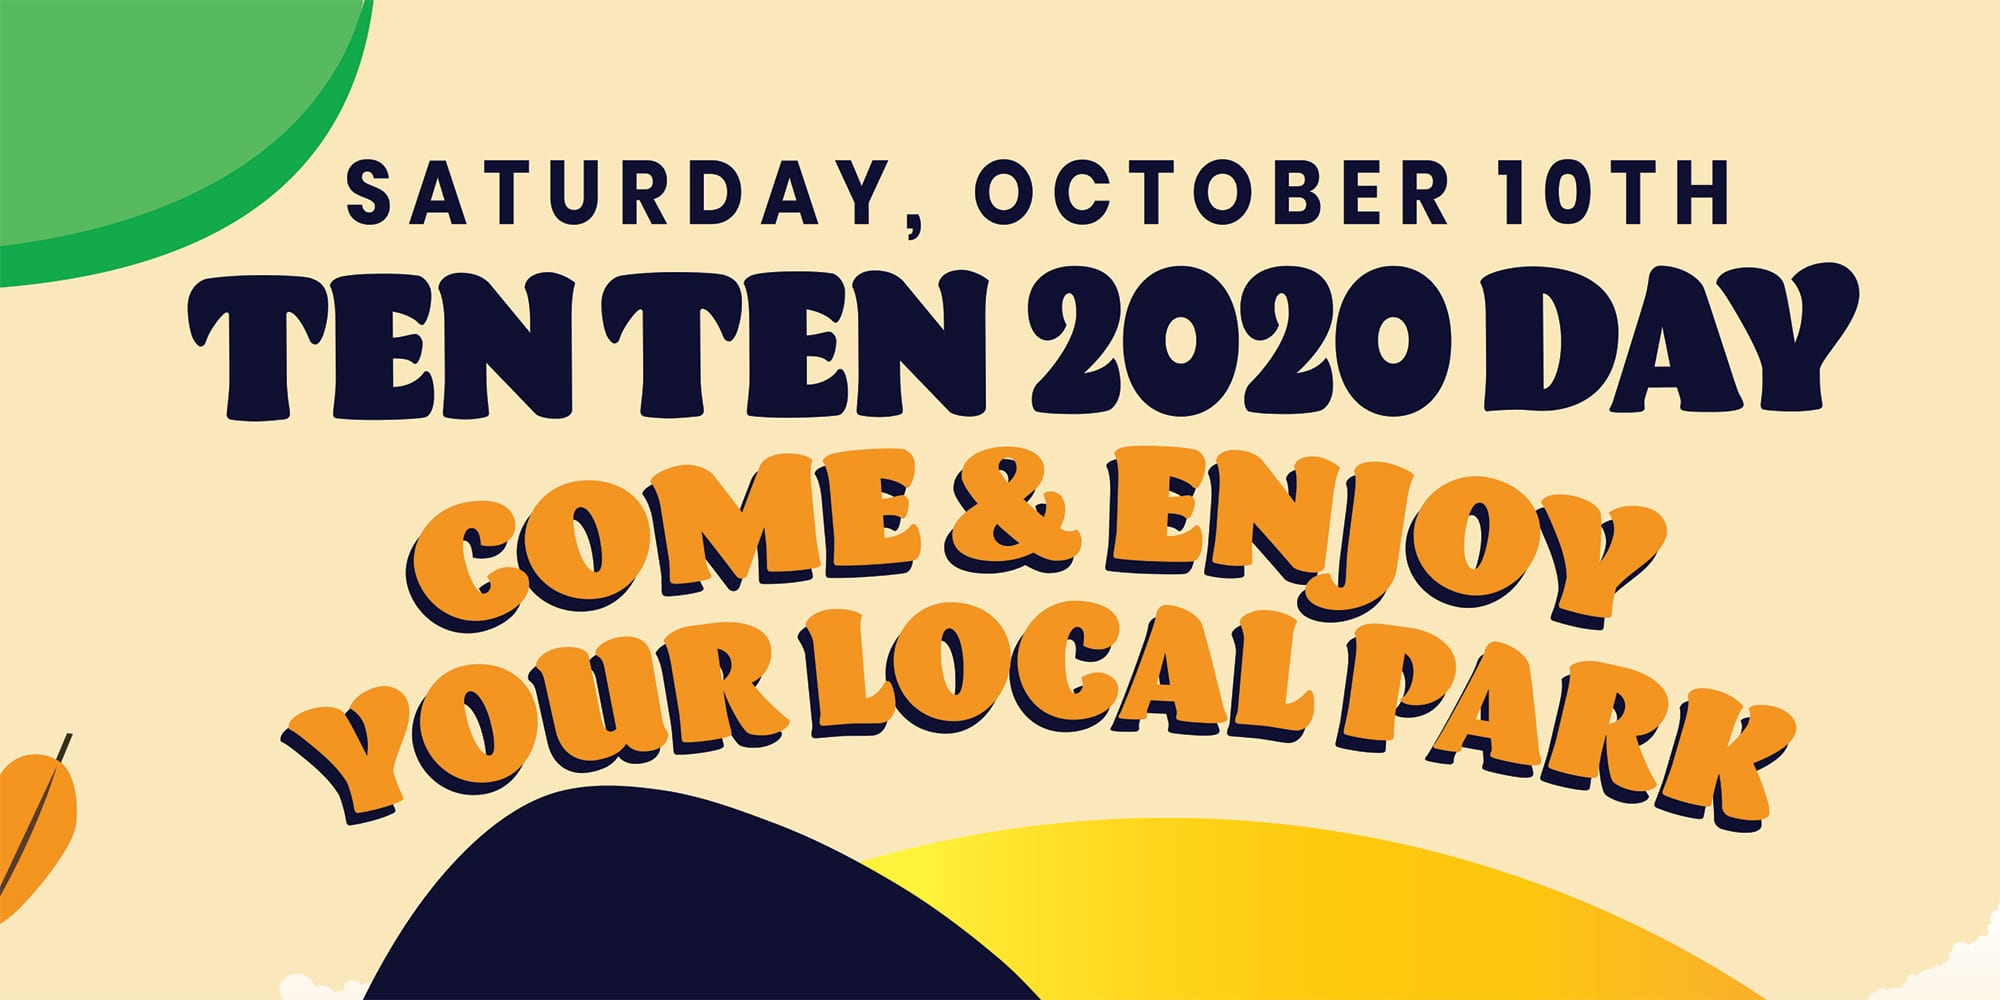 Ten Ten 2020 Day: Enjoy your local park.